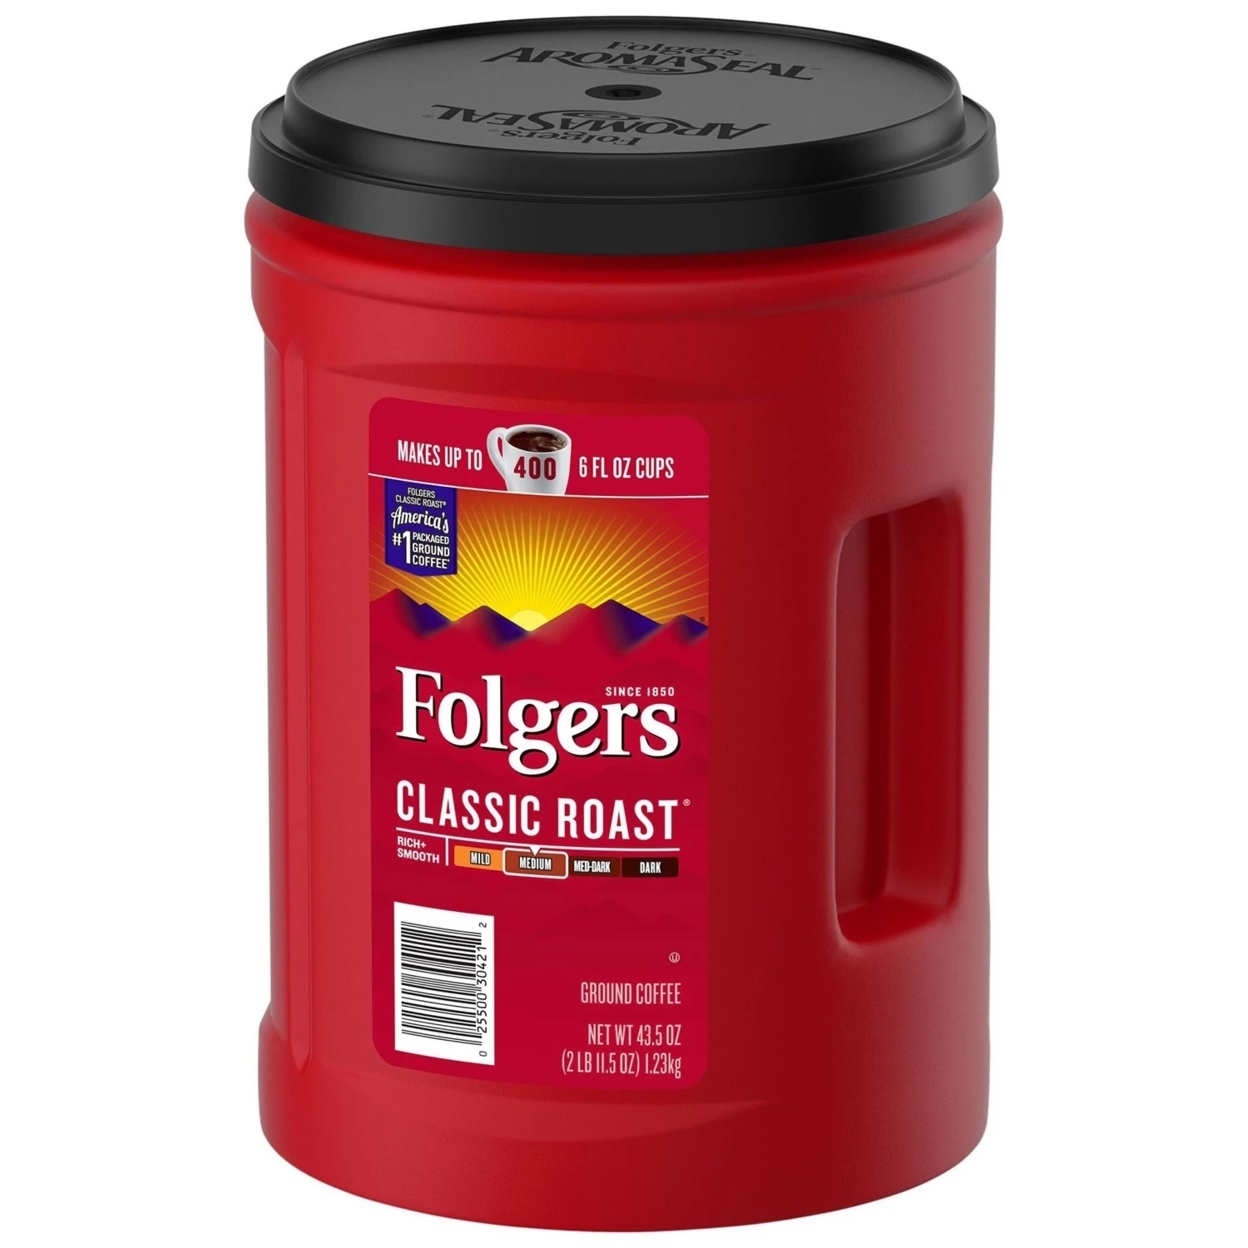 Folgers Classic Roast Ground Coffee (43.5 Ounce)